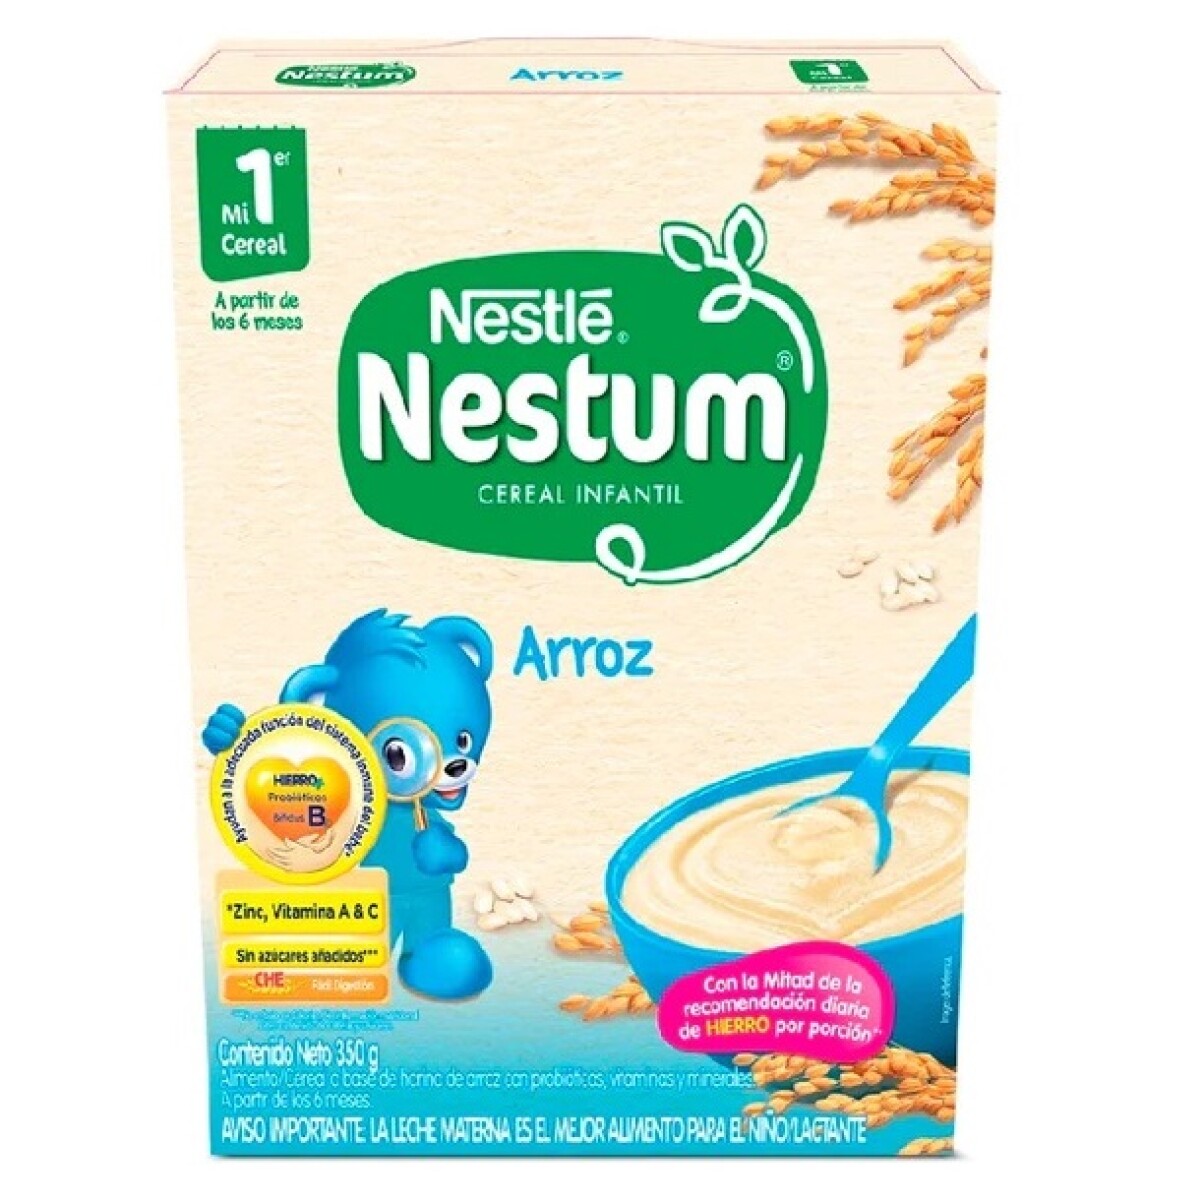 Cereal Infantil Arroz Nestum Nestlé 350 Grs. — Farmacia El túnel